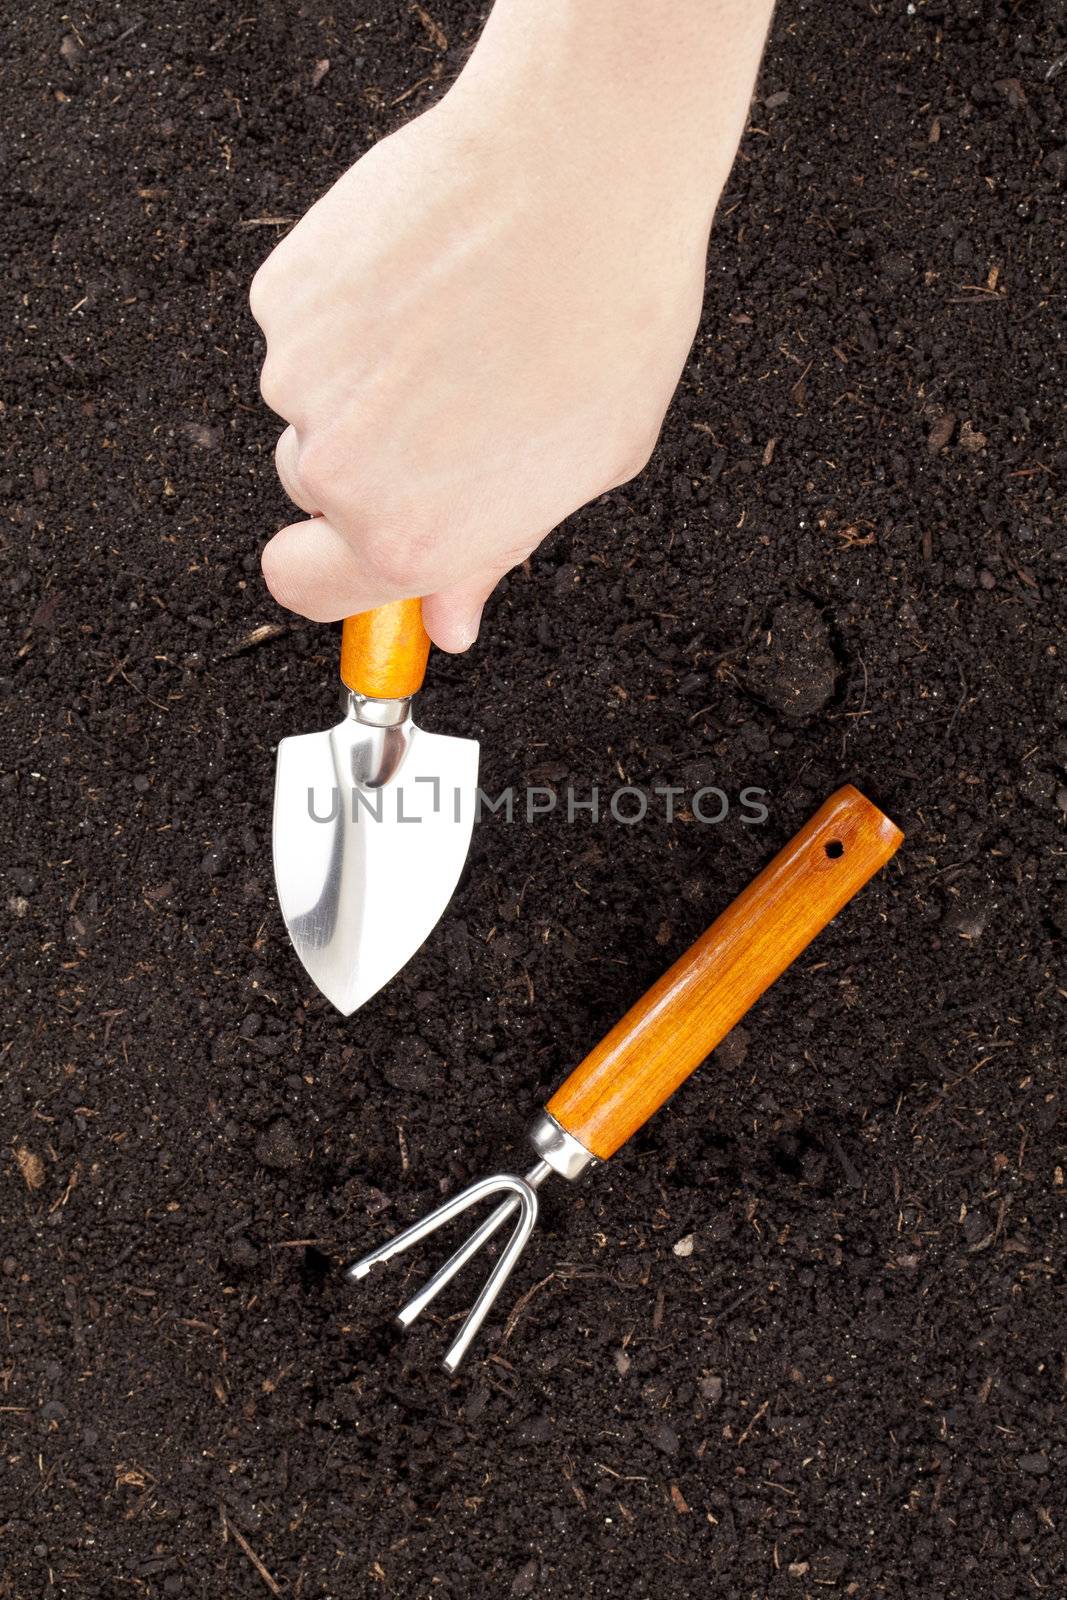 Close up image of digging soil using shovel